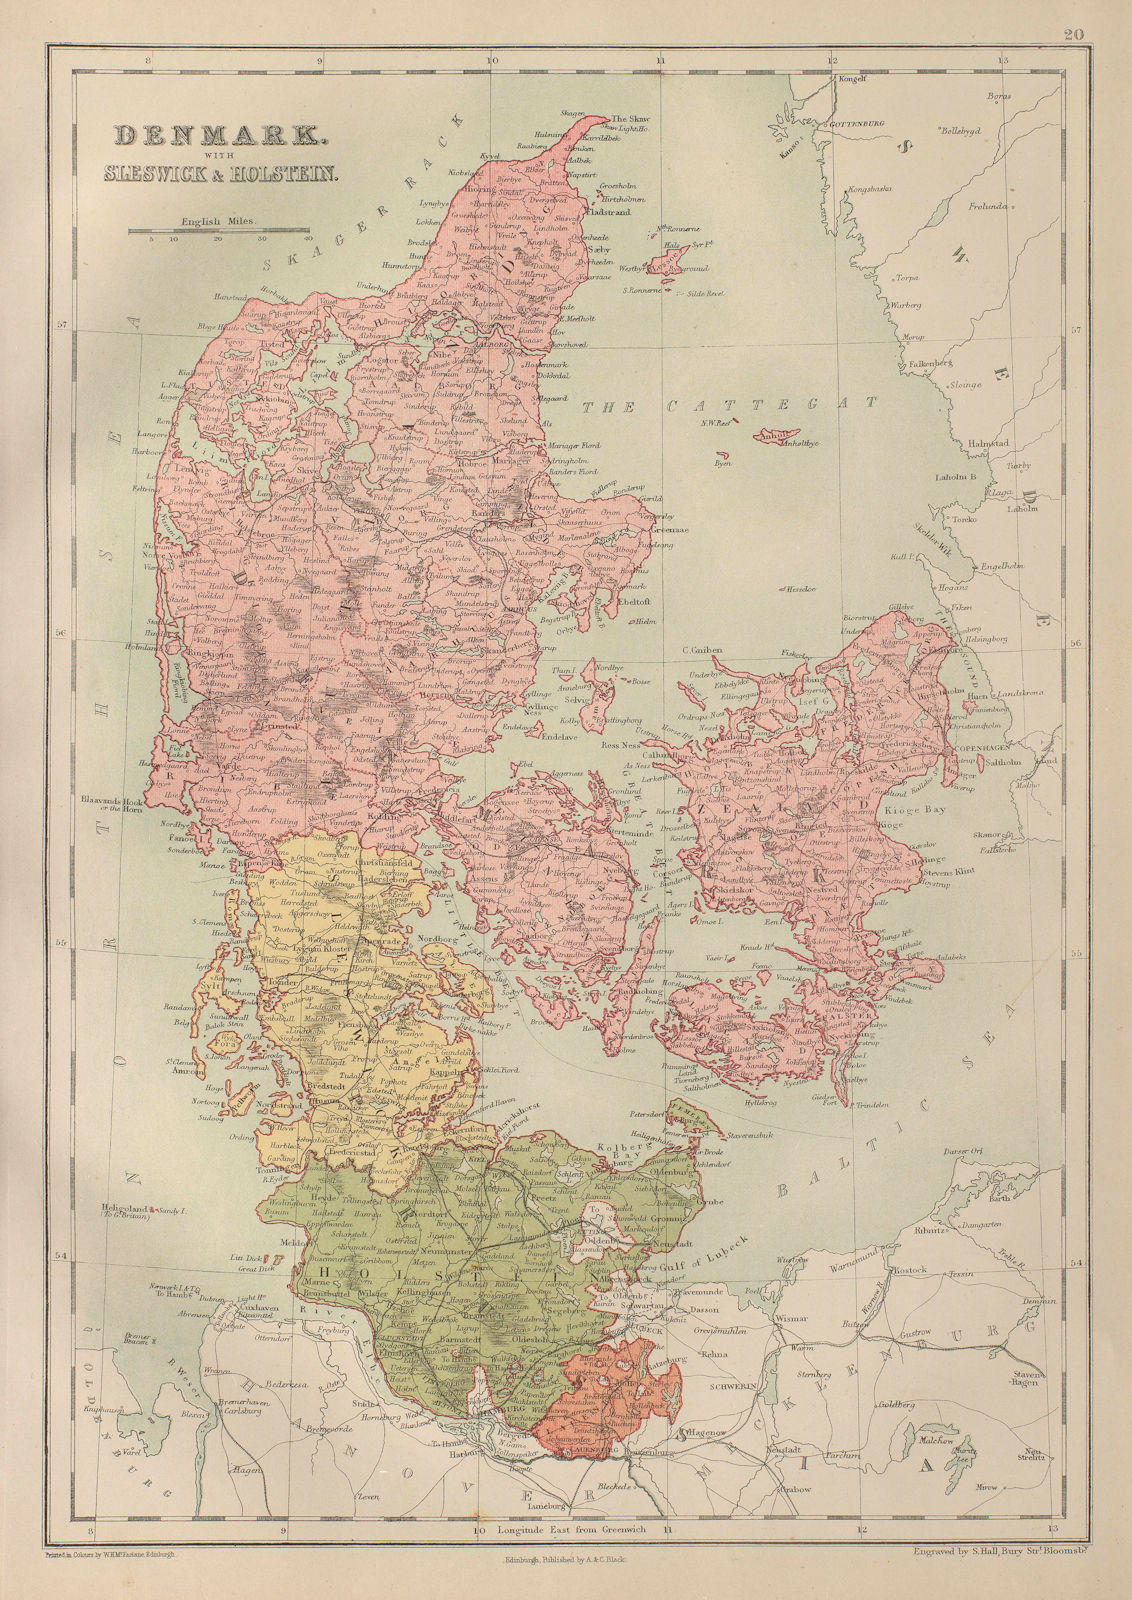 Associate Product Denmark, Schleswig & Holstein. BARTHOLOMEW 1870 old antique map plan chart